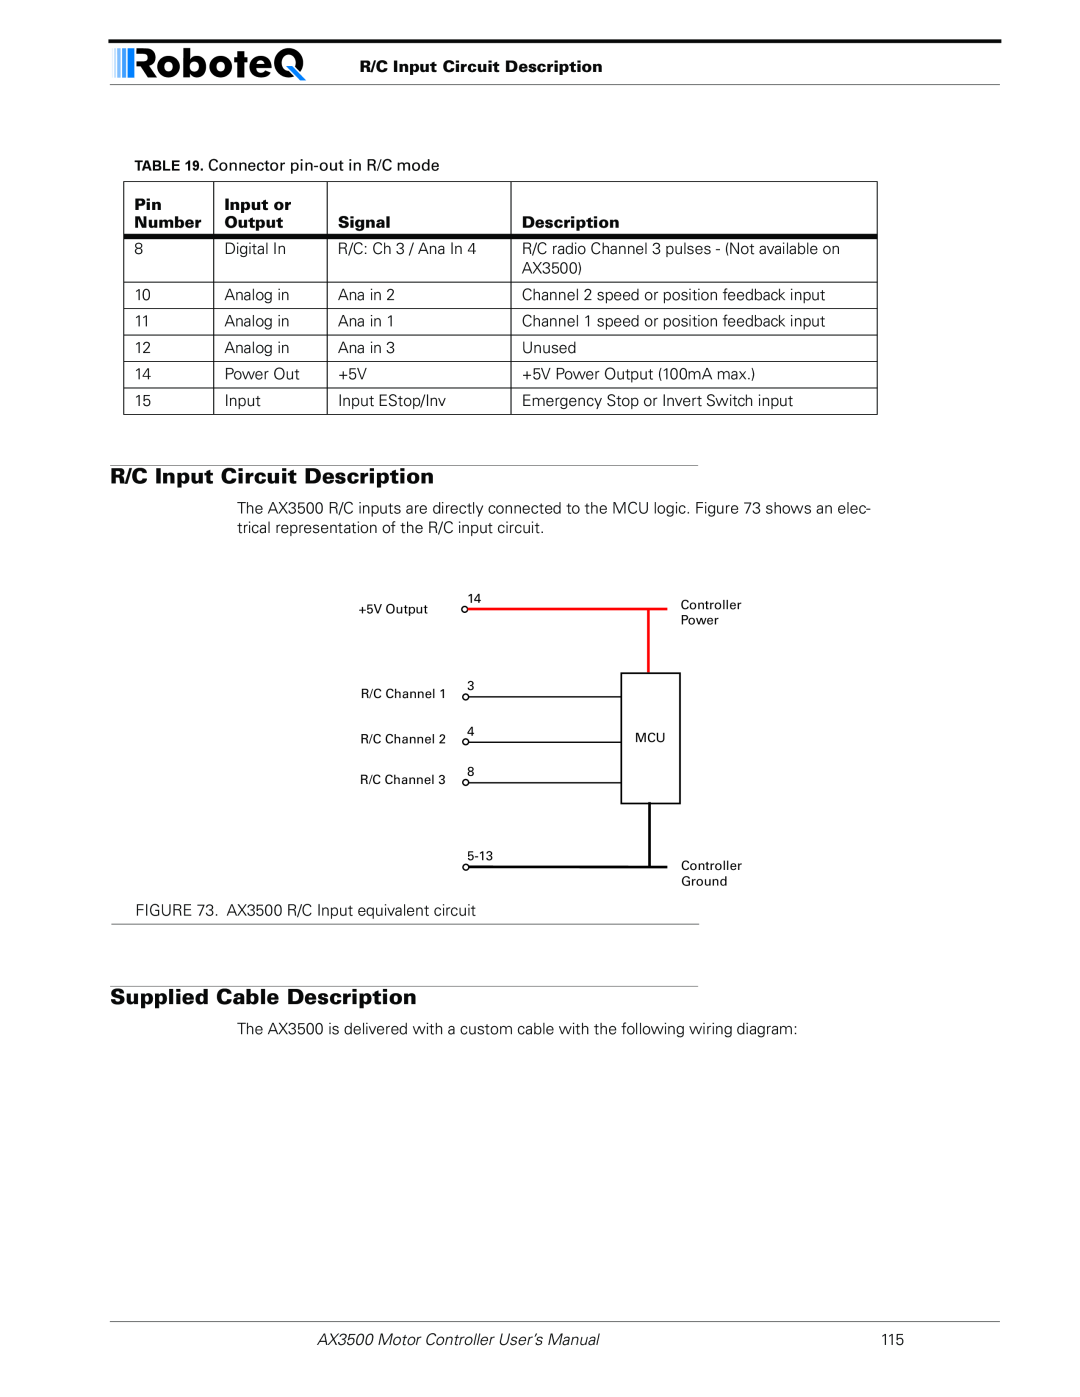 RoboteQ AX3500 user manual R/C Input Circuit Description, Supplied Cable Description, Input or, Number, Output, Signal 